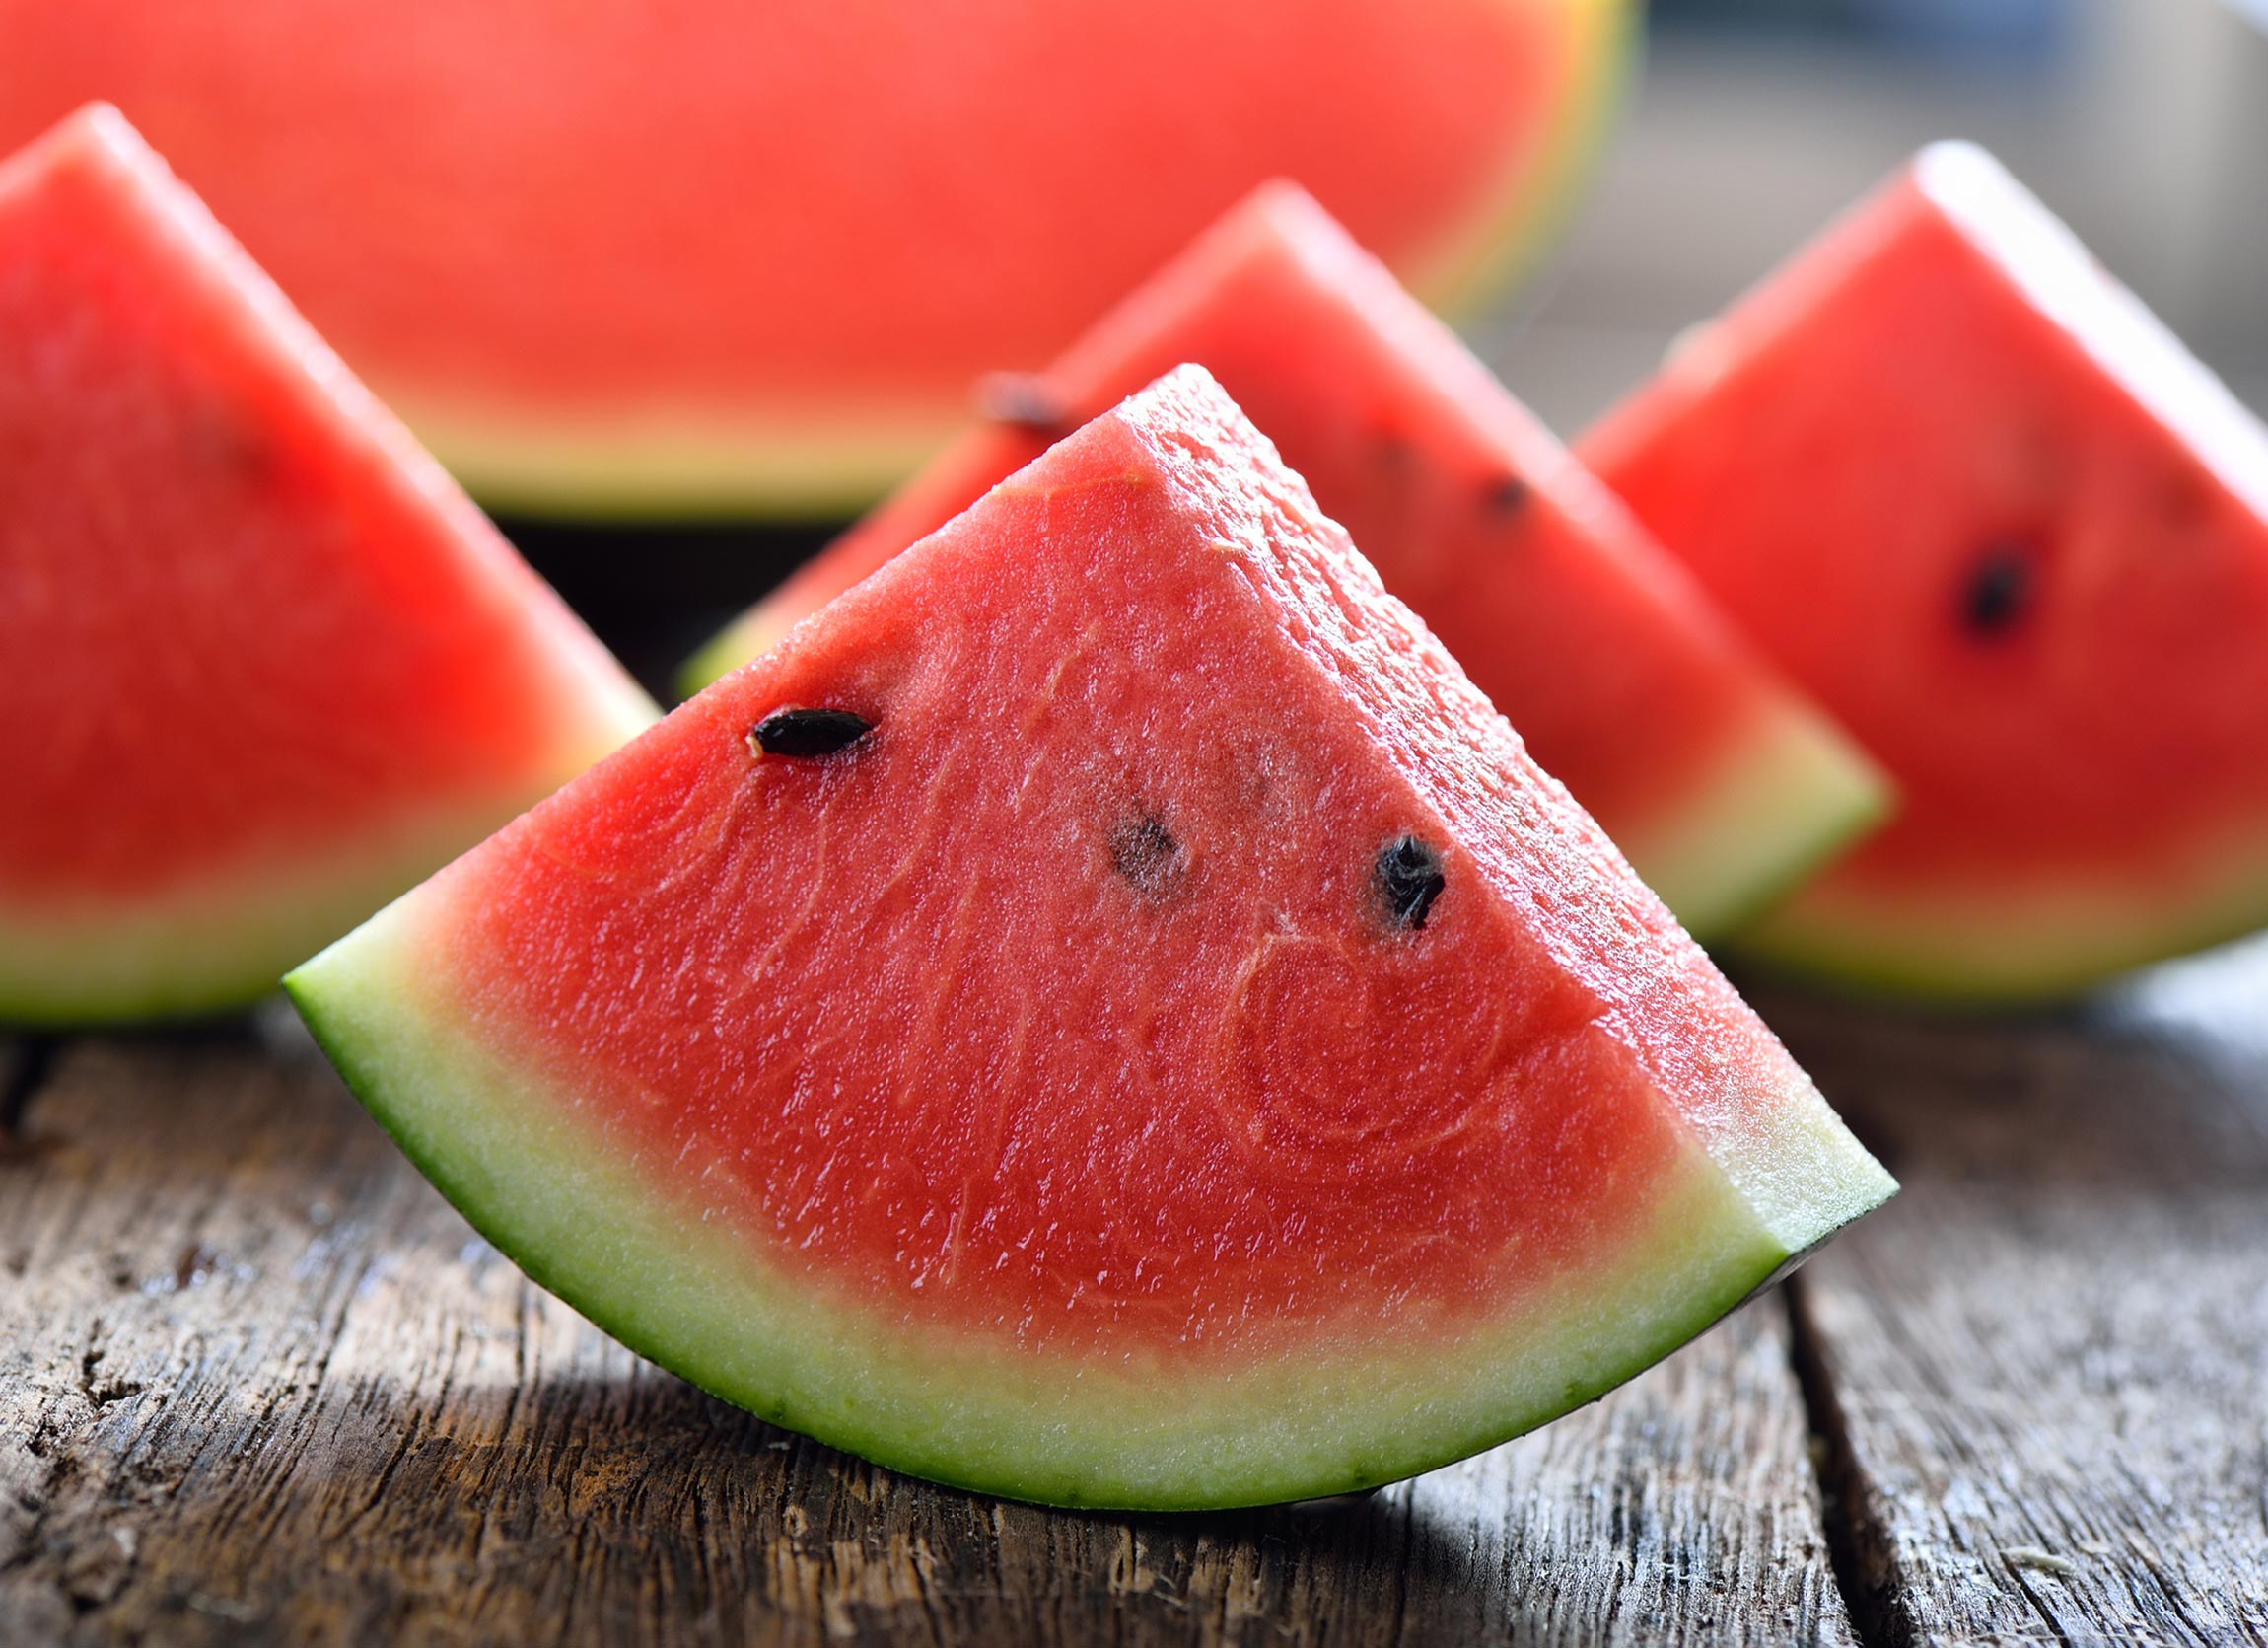 5. Watermelon Nail Art for a Fun and Fresh Summer Design - wide 10